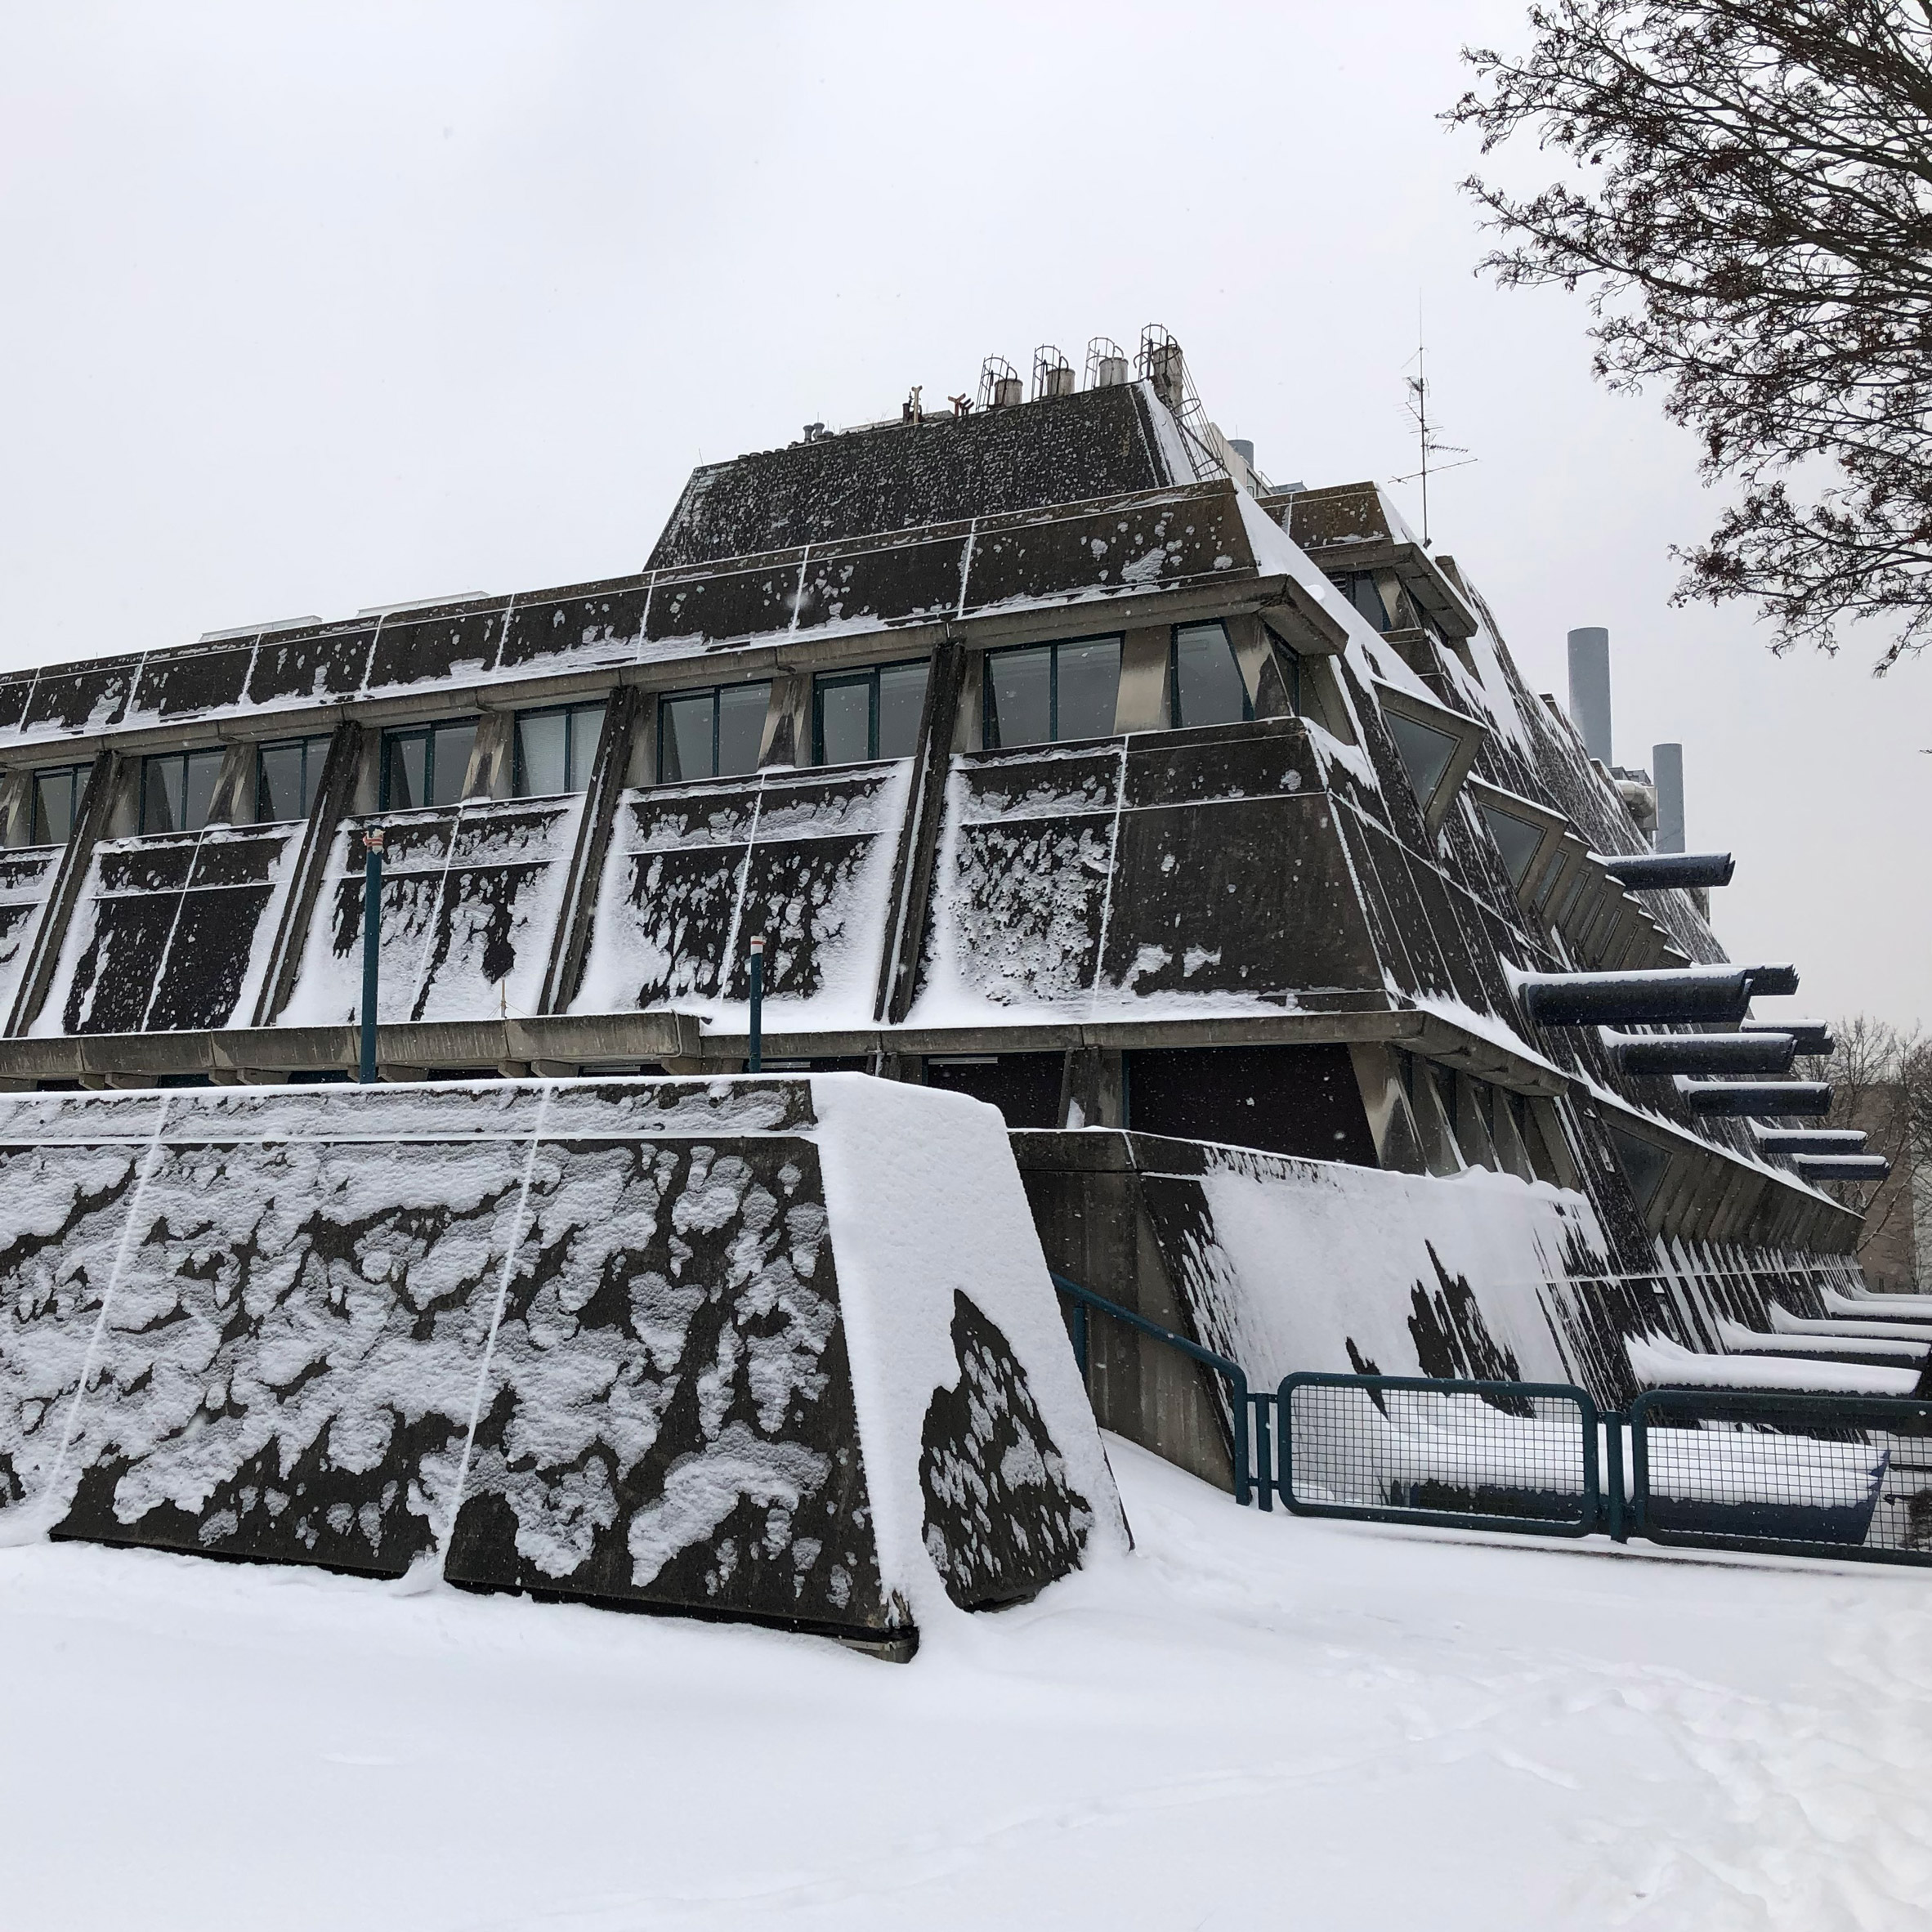 Mäusebunker building in snow